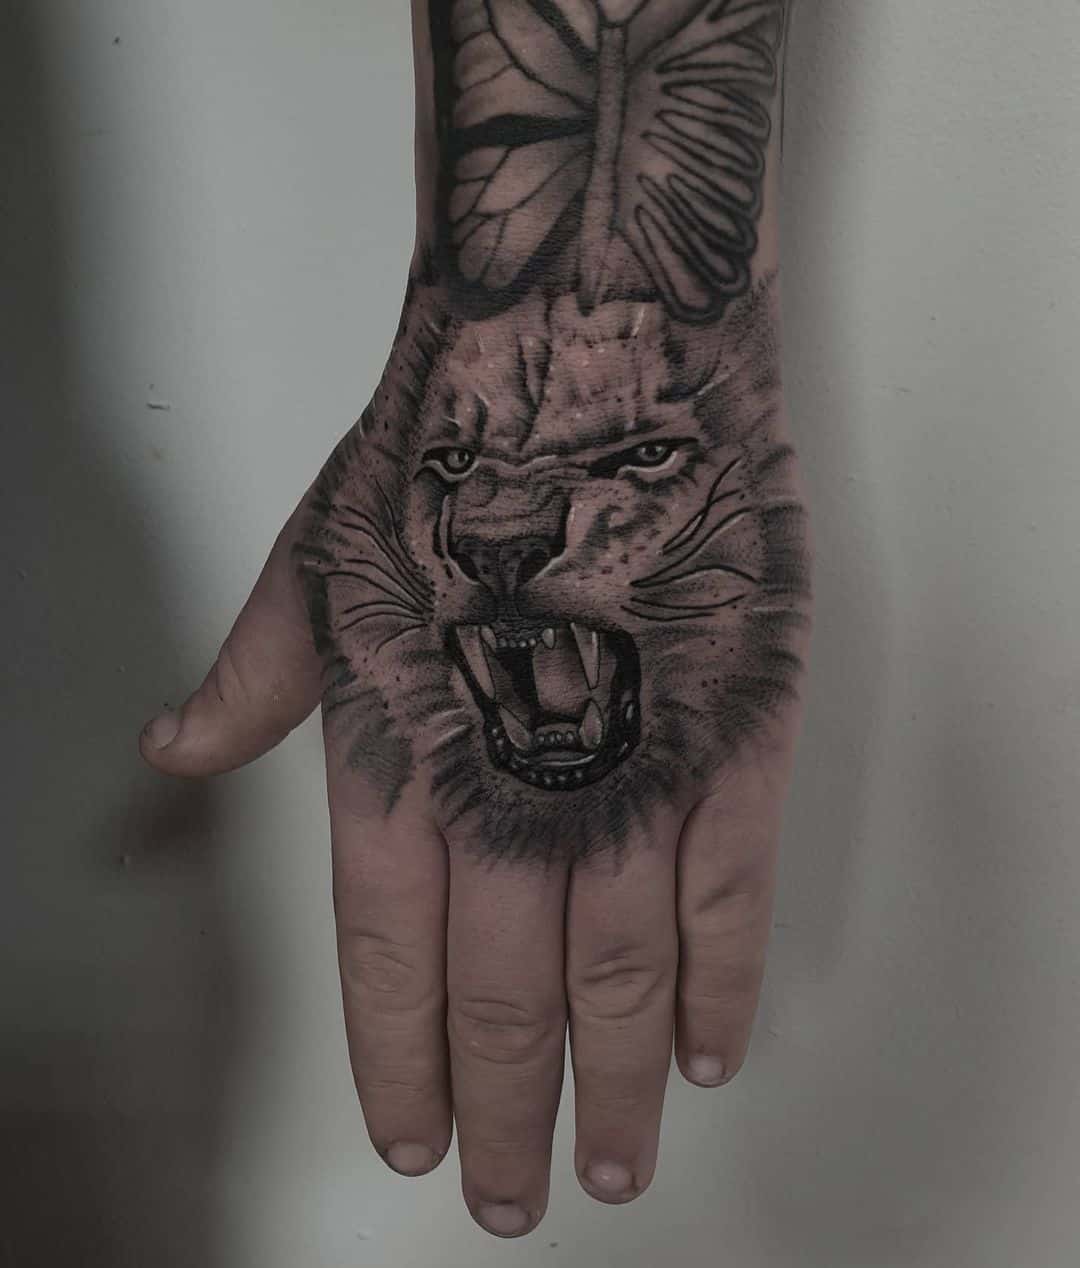 Wonderful roaring lion tattoo by jerzi ink